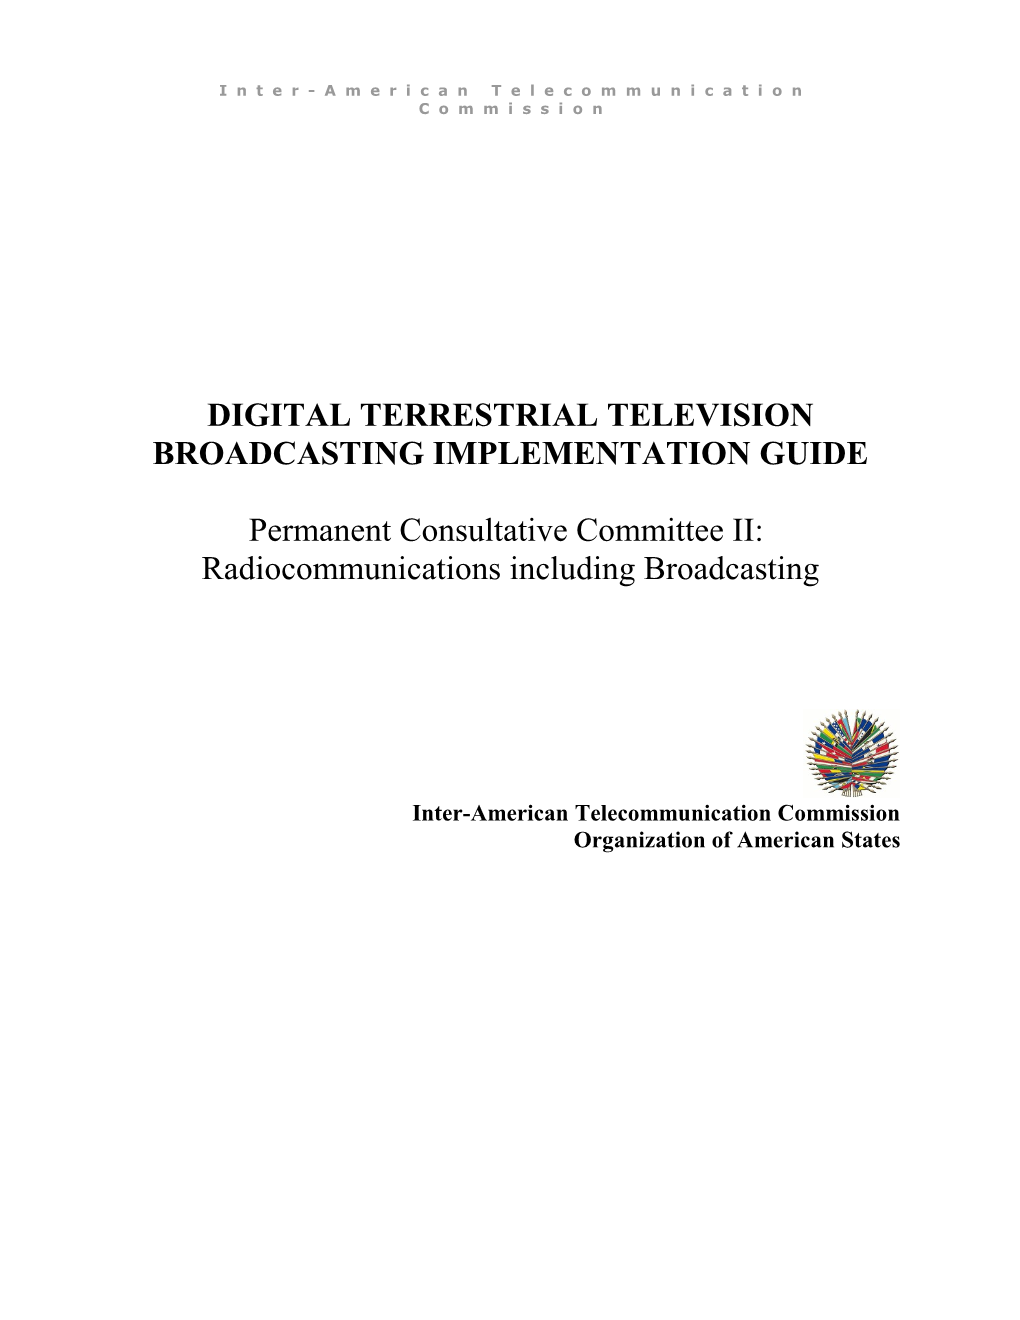 Digital Terrestrial Television Broadcasting Implementation Guide